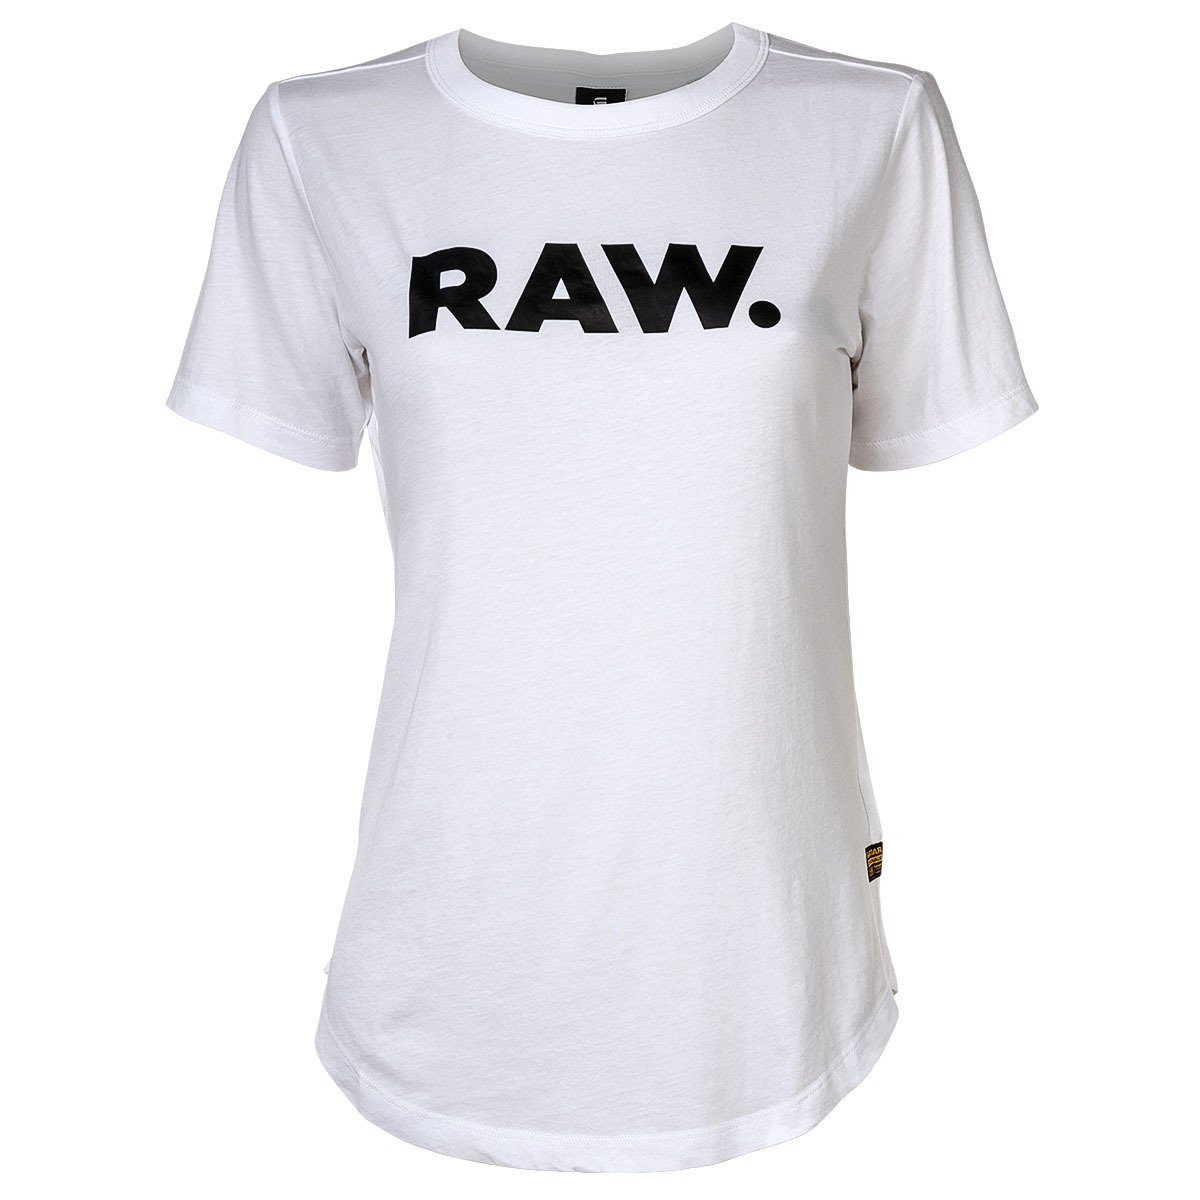 Damen T-Shirt slim, RAW. Kurzarm G-Star - Rundhals, Weiß RAW T-Shirt